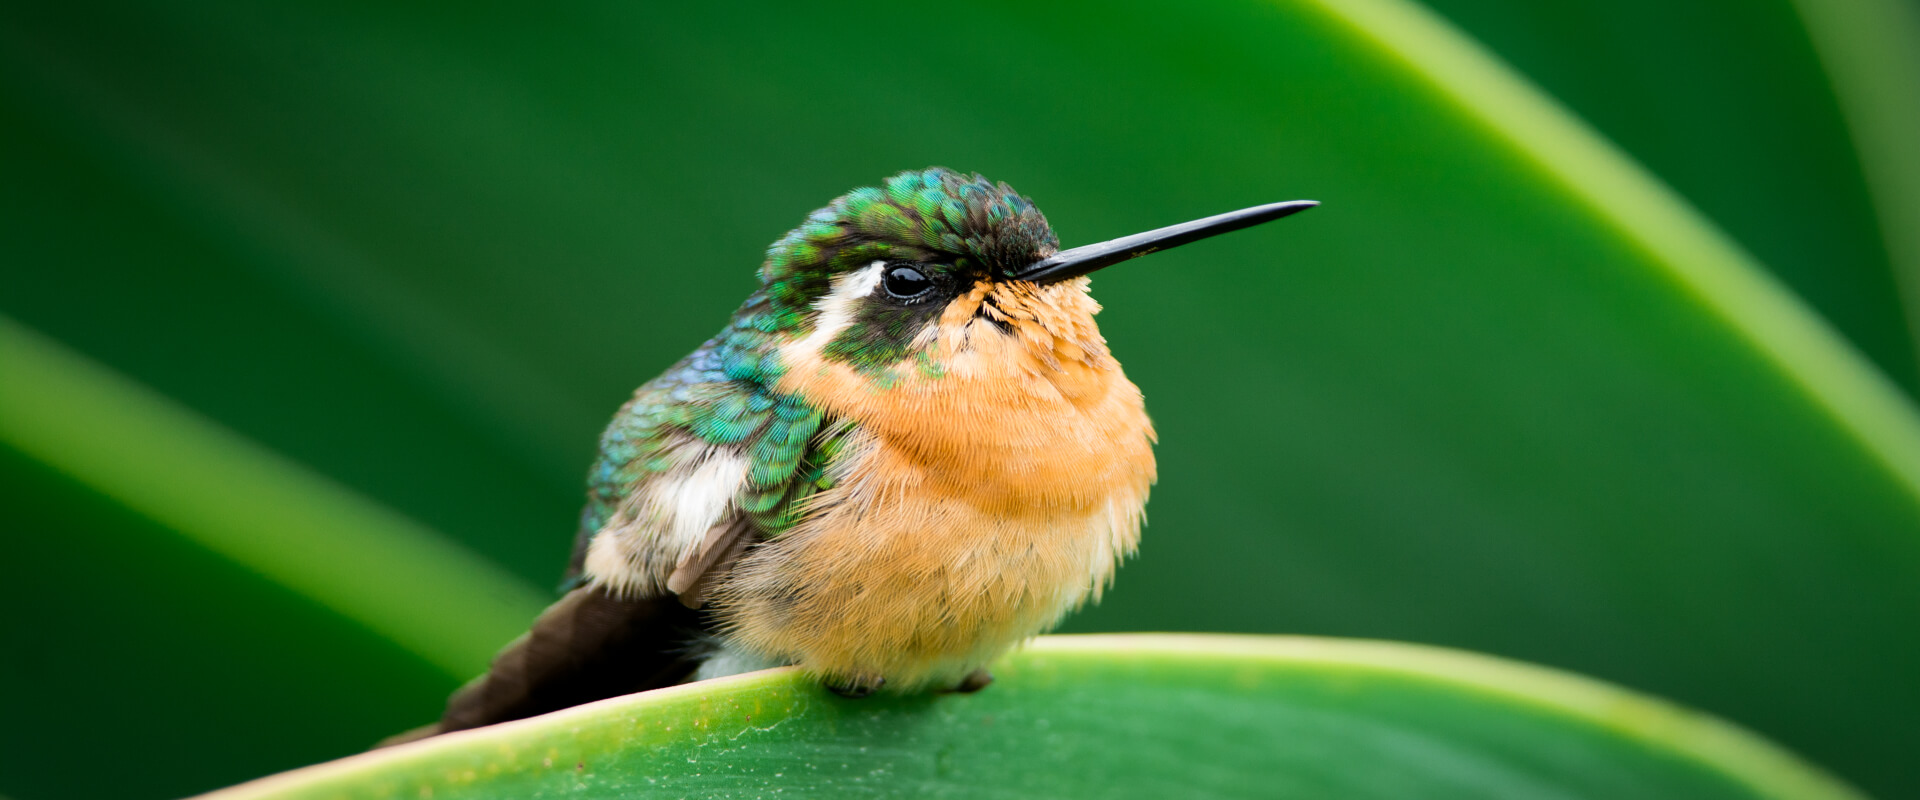 Curi Cancha Birdwatching Private Tour | Costa Rica Jade Tours